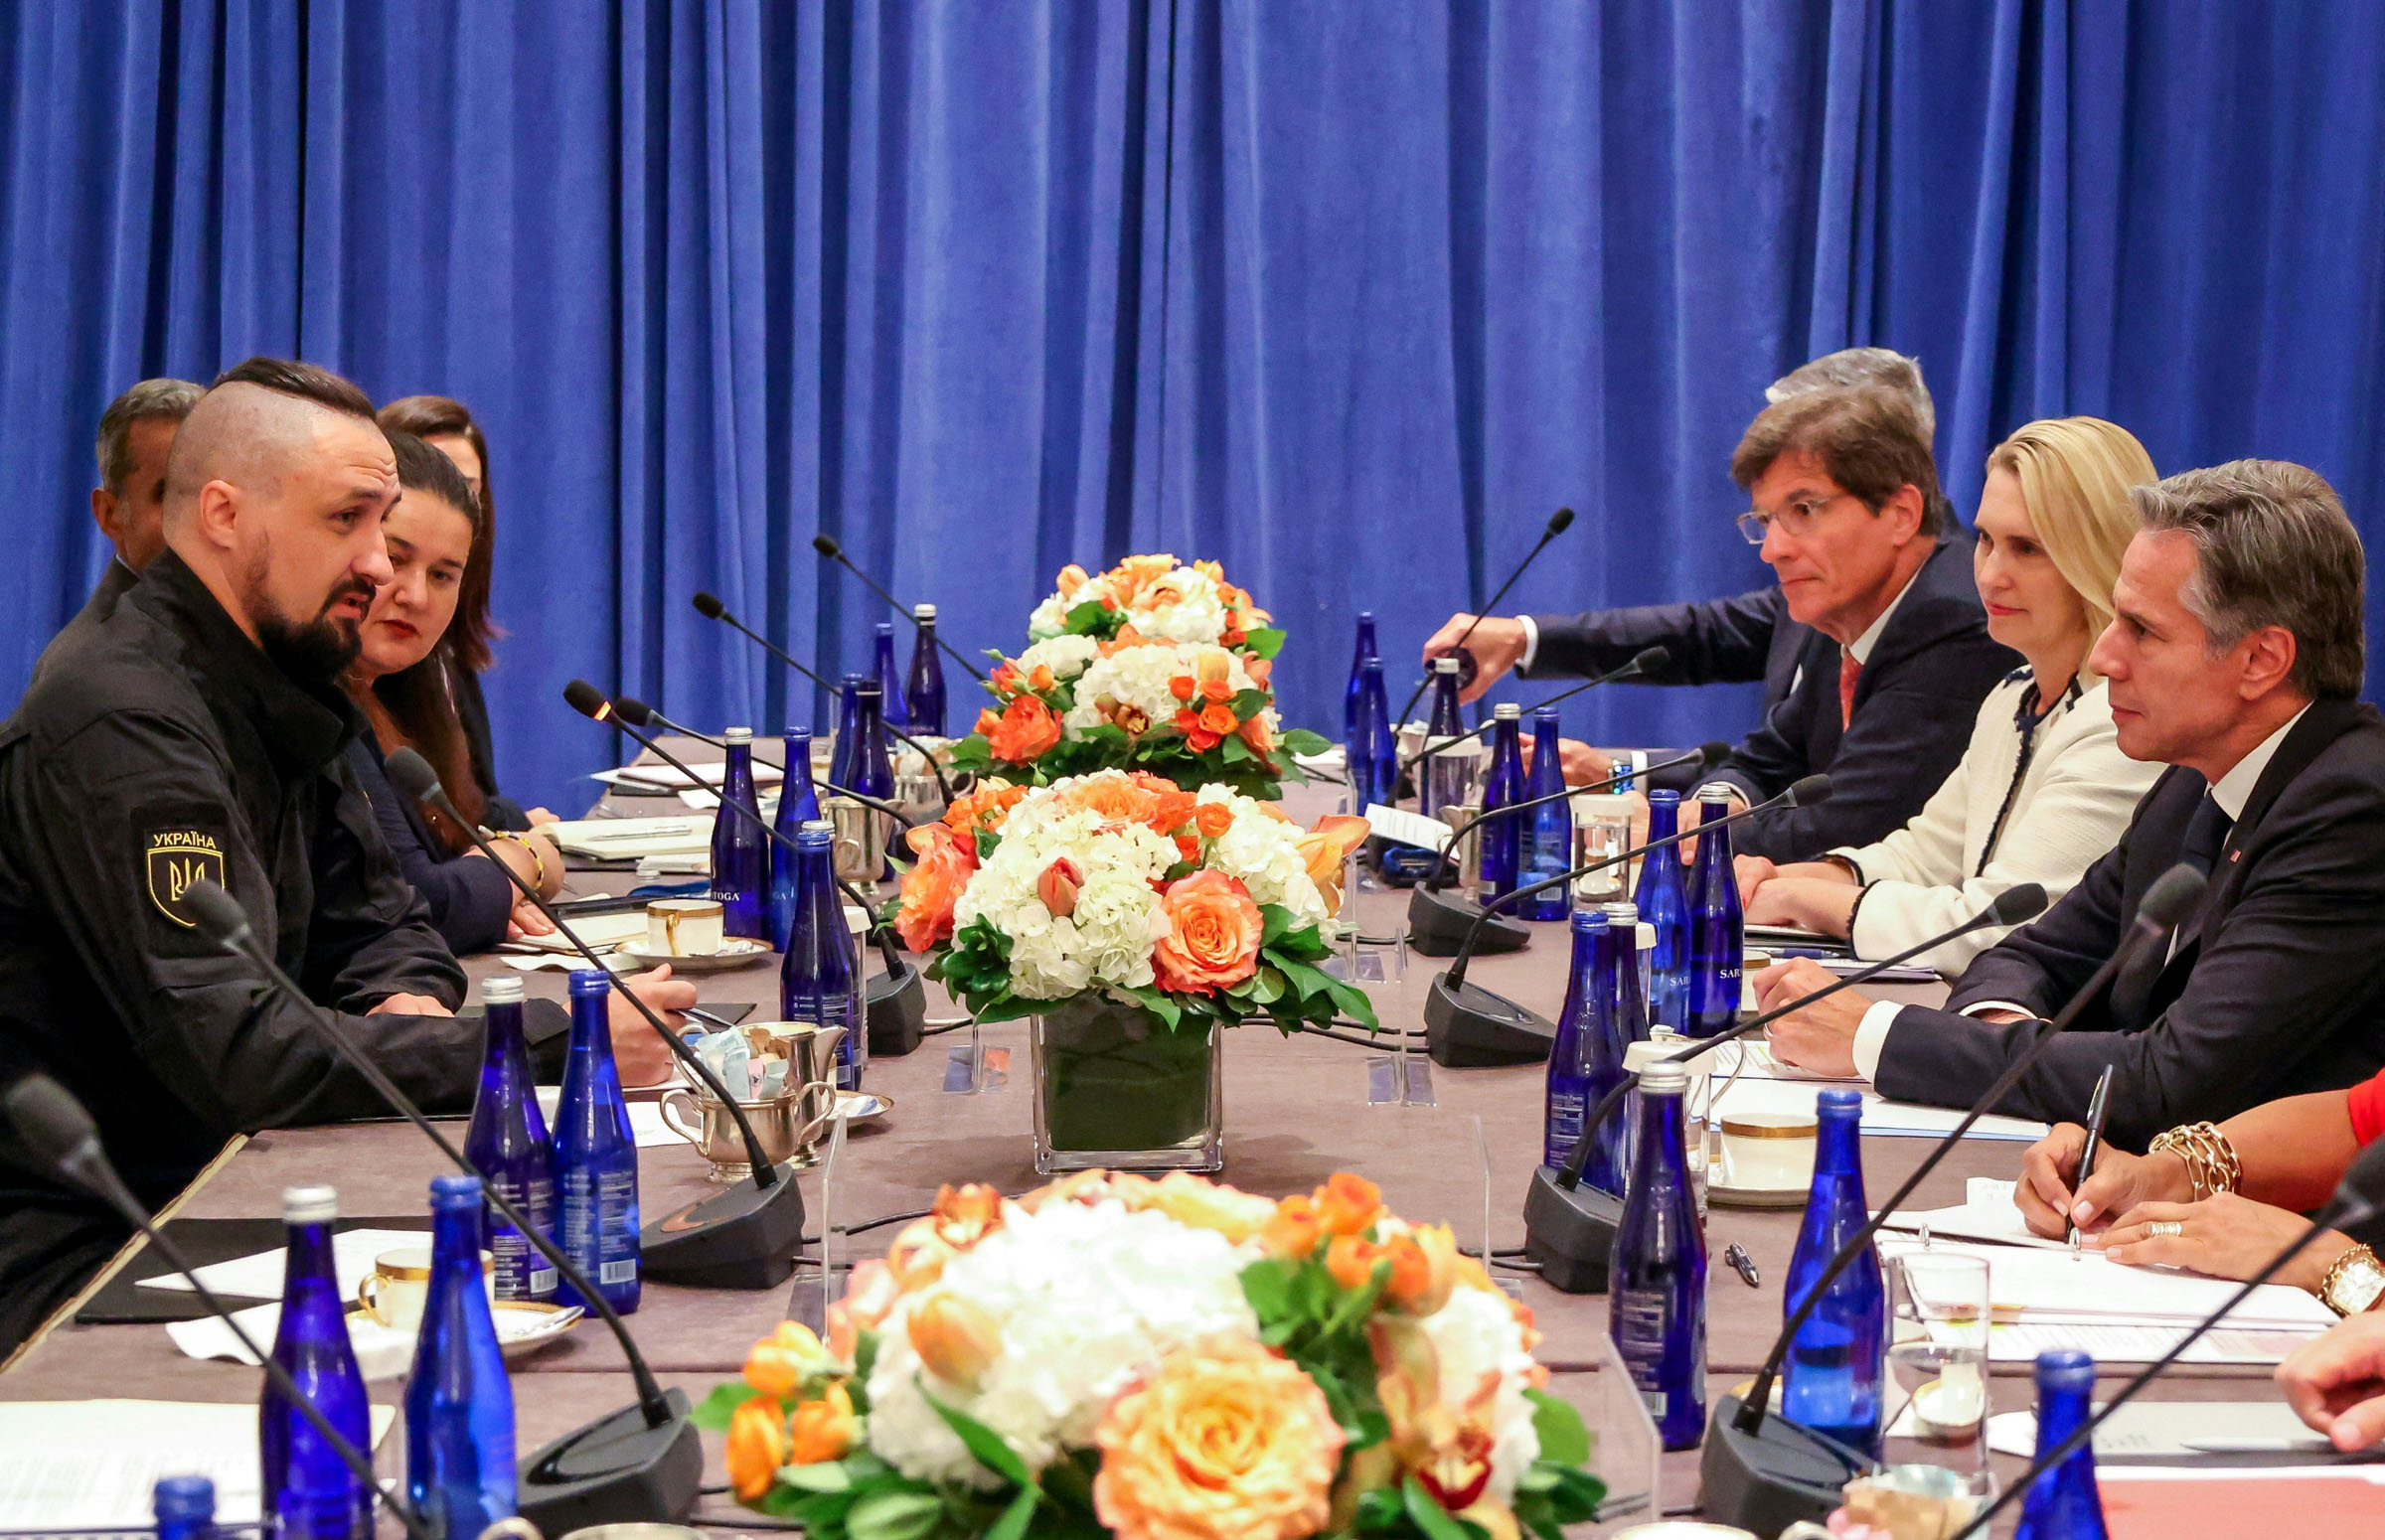 CEO Roundtable Event on Ukraine Economic Recovery in New York City